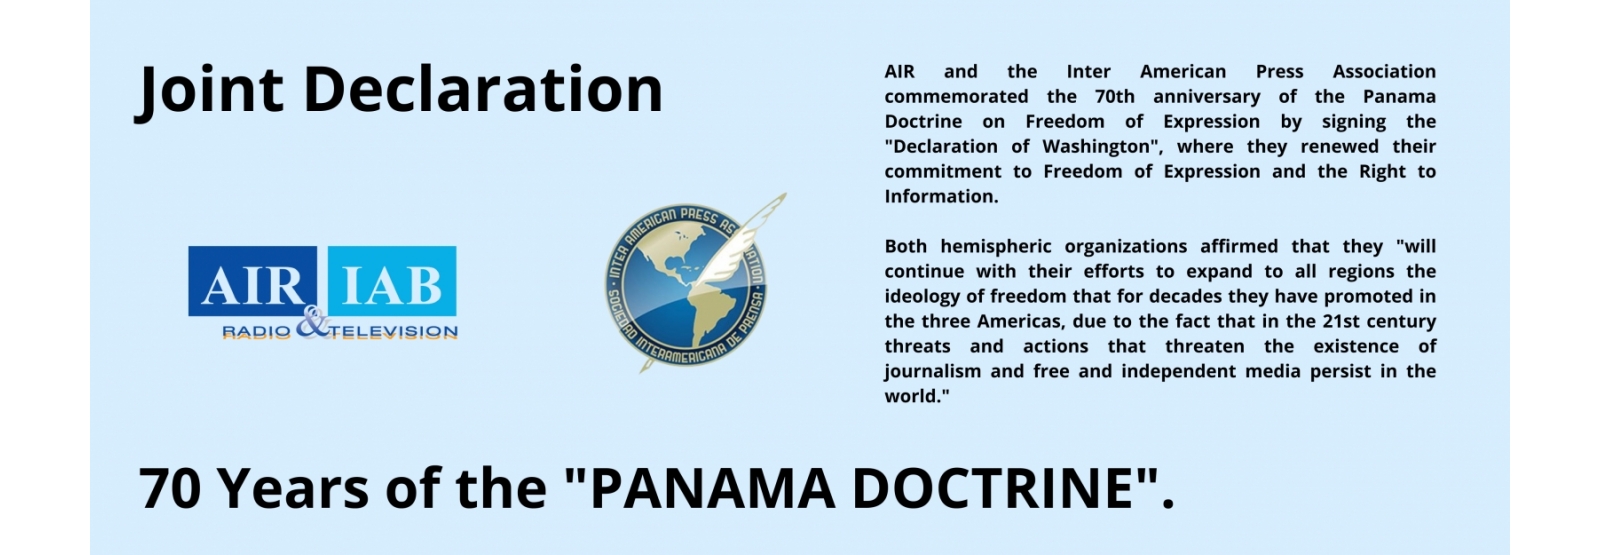 Banner Doctrina Panama - Ingles